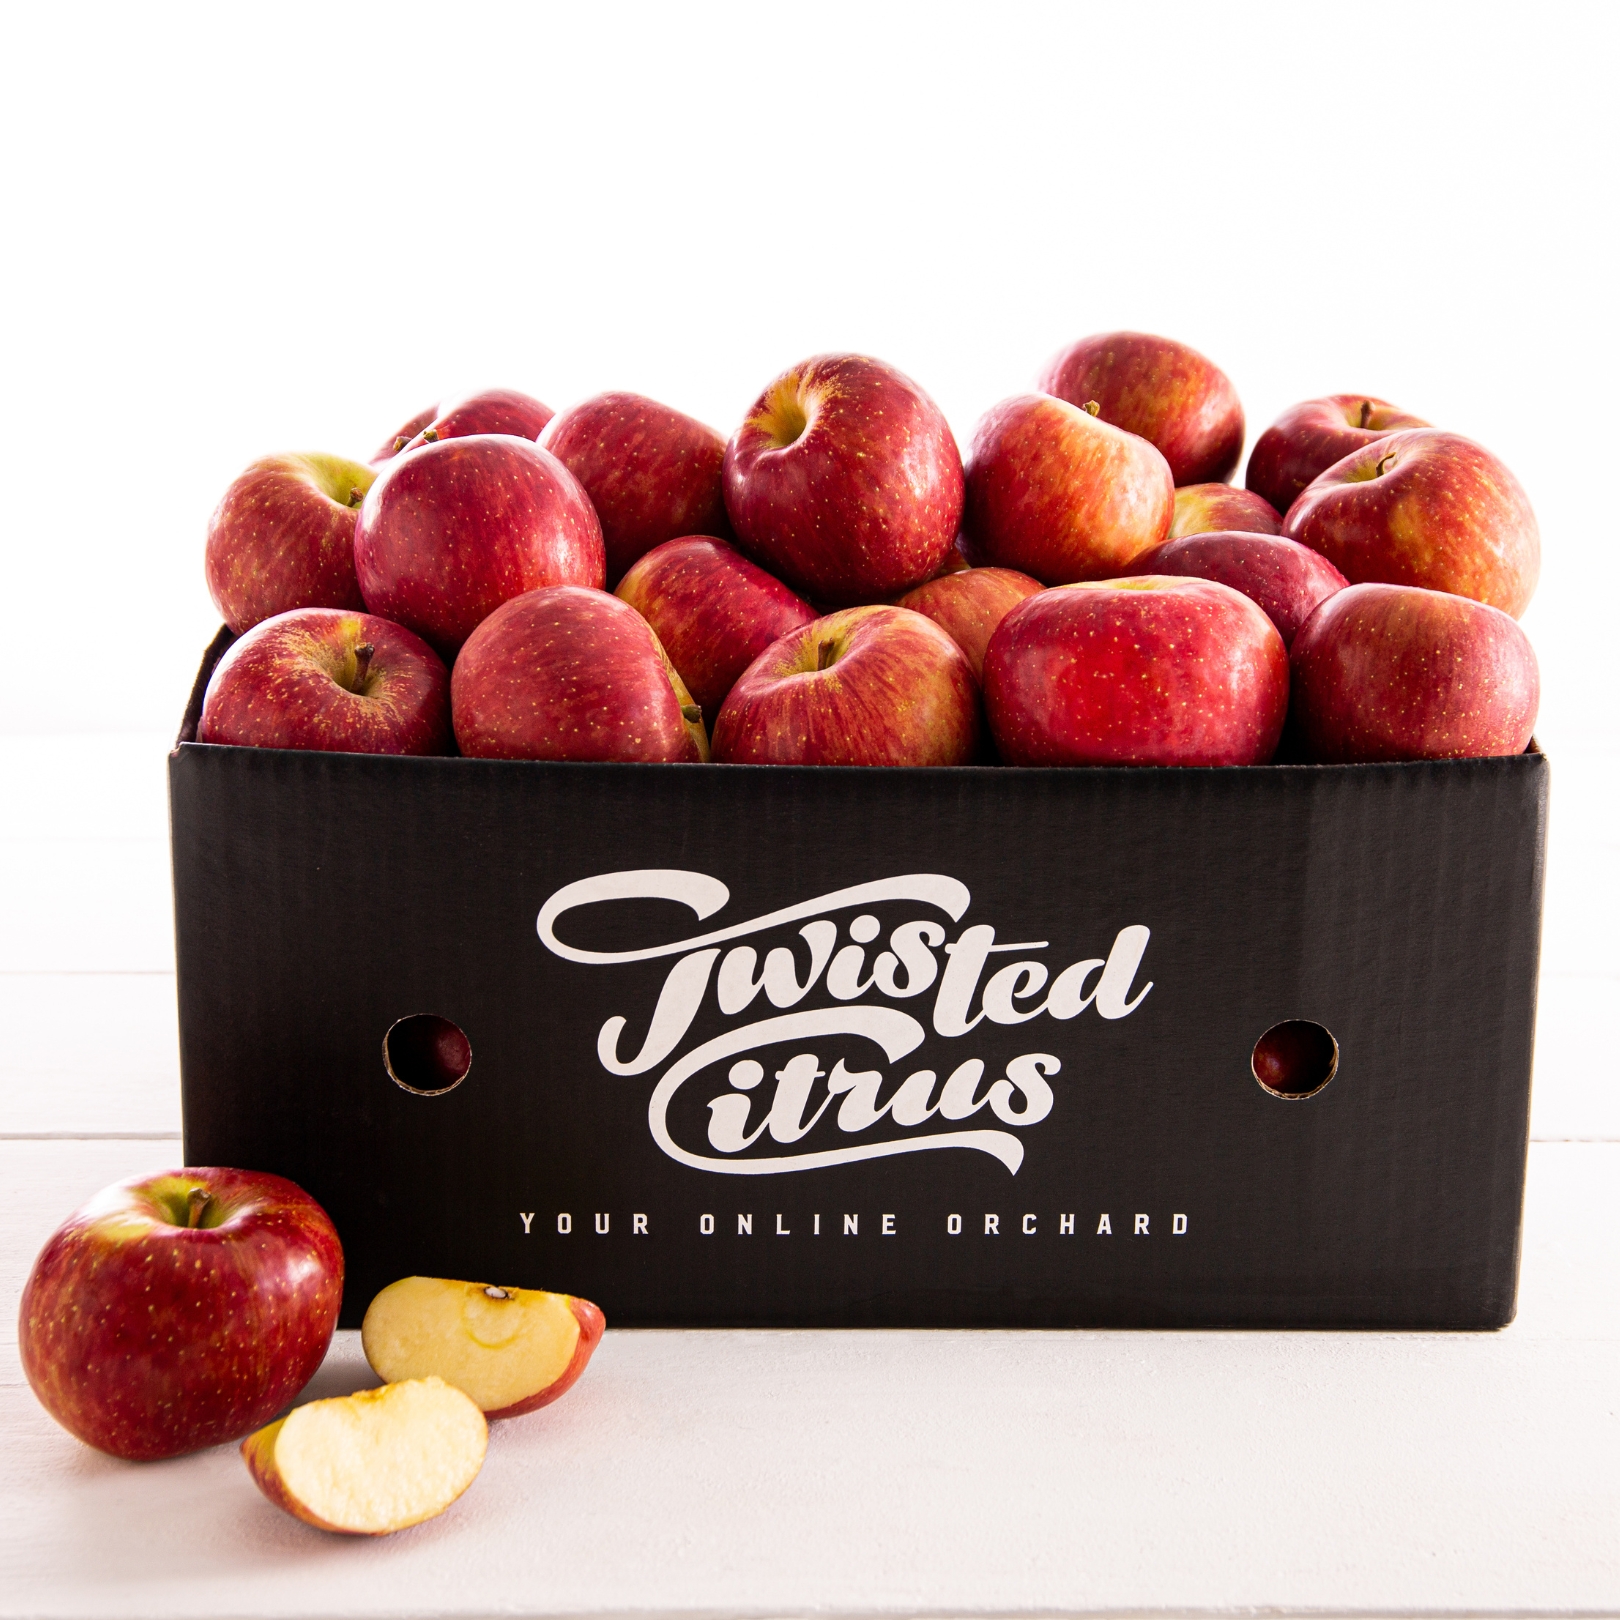 Buy Apples - Fuji Online NZ - Twisted Citrus